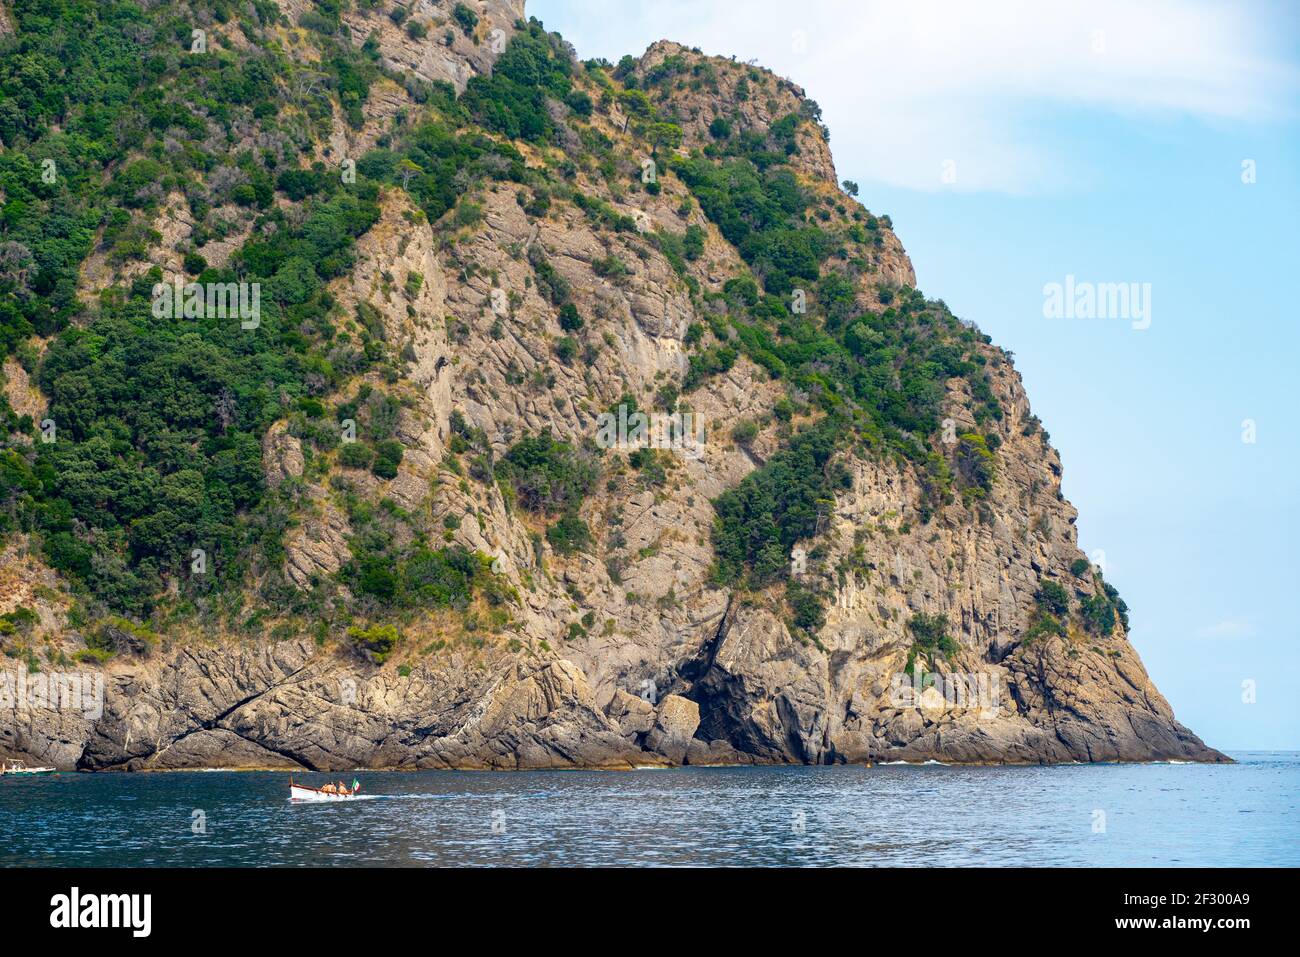 Small fishing boat is navigating in the Ligurian sea near the Portofino promontory Stock Photo